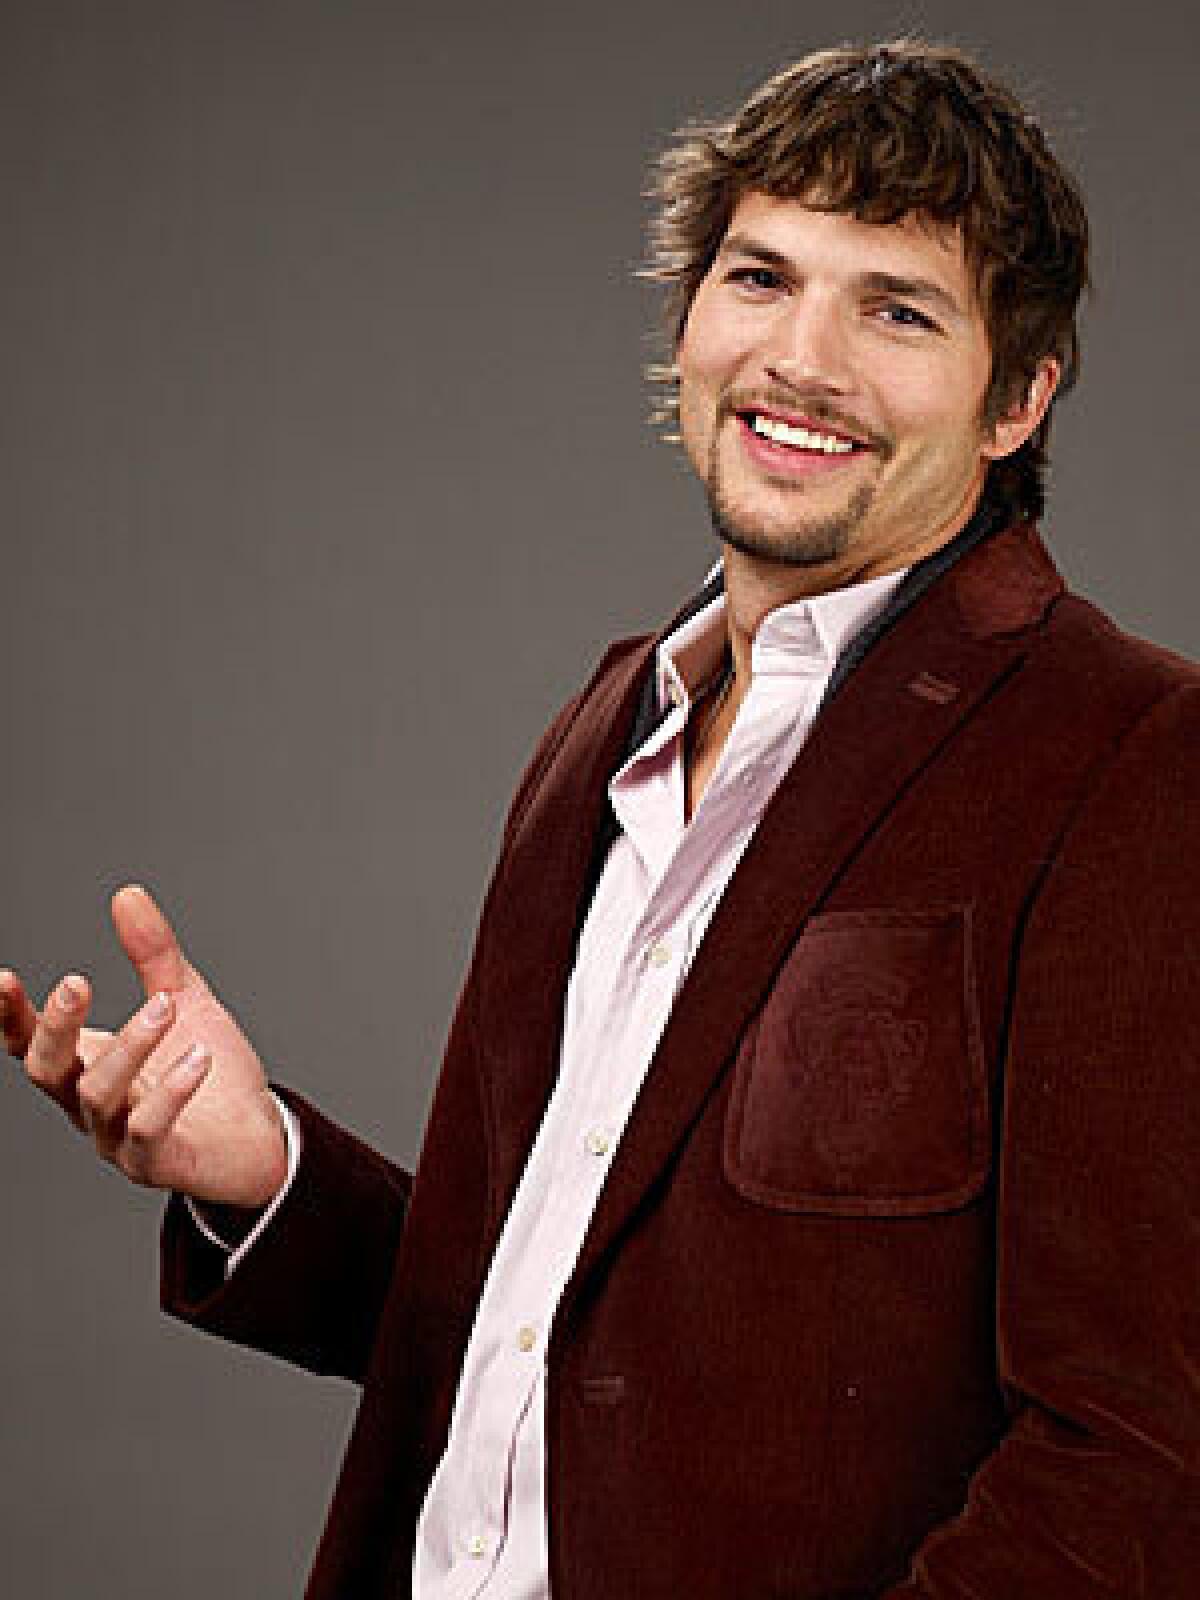 Ashton Kutcher lists his Beverly Hills bachelor pad for $3.7 million.